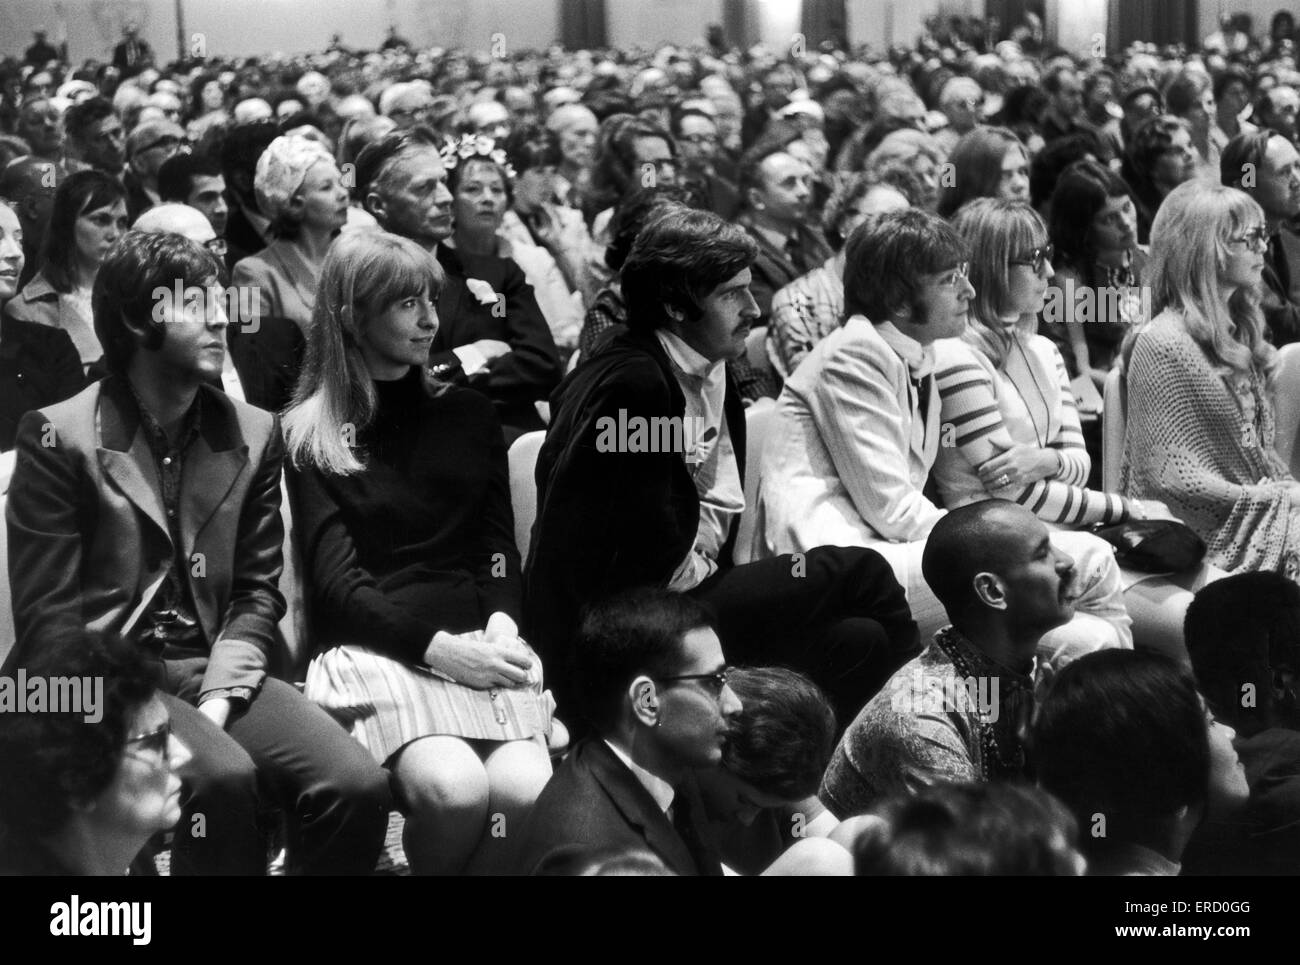 The Beatles attend lecture by Maharishi Mahesh Yogi at   the Hilton Hotel on Park Lane, London, 24th August 1967. Paul McCartney, Jane Asher, Mike McGear, John Lennon, Cynthia Lennon, Pattie Harrison, George Harrison. Stock Photo